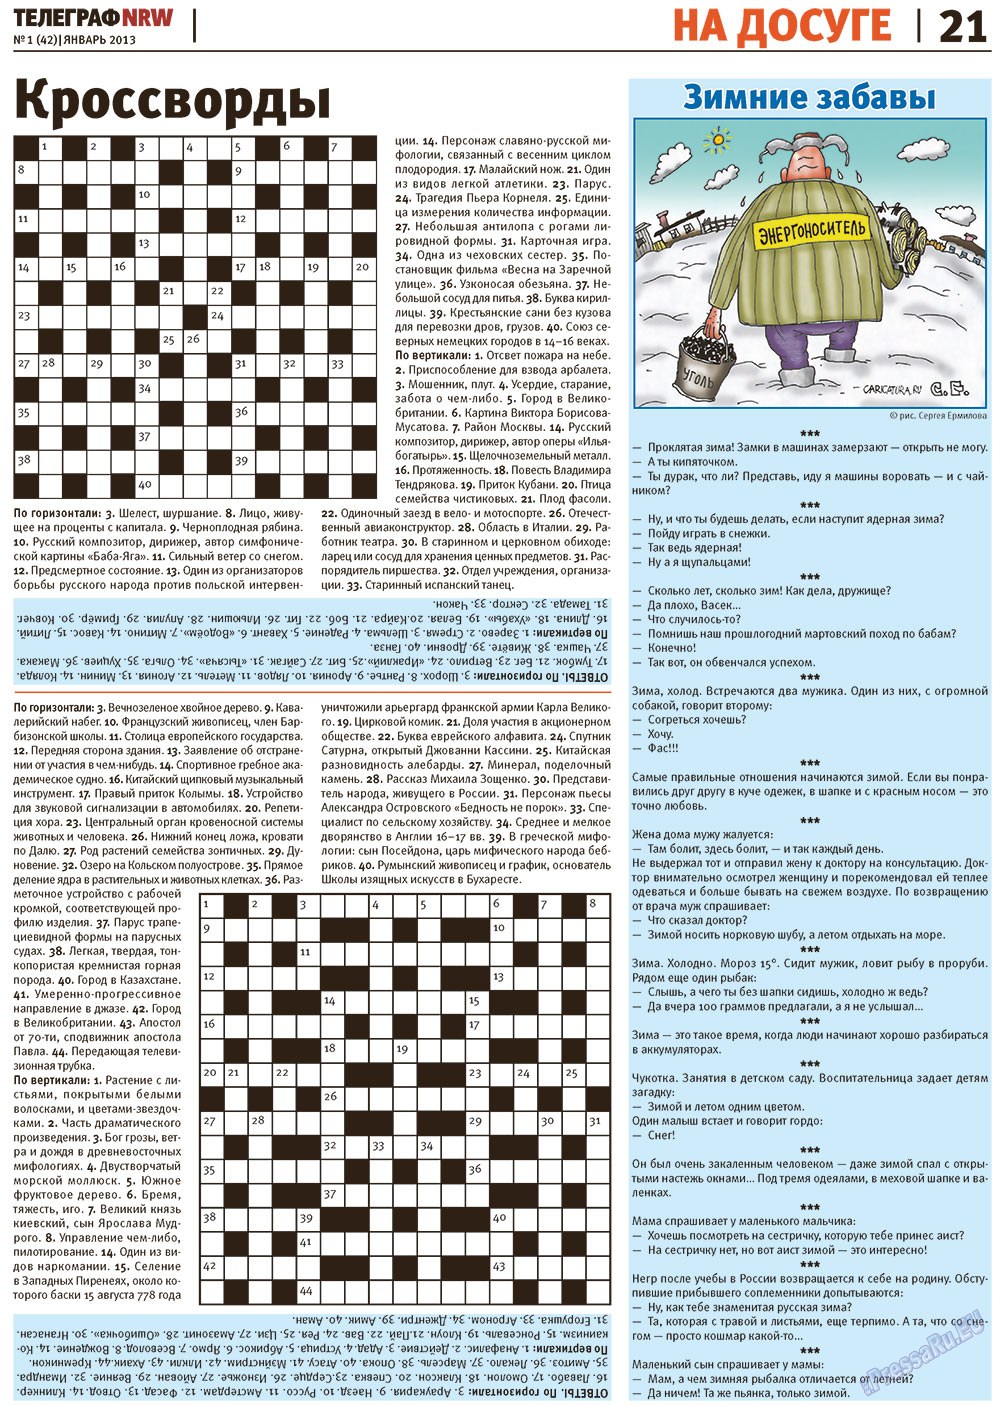 Телеграф NRW, газета. 2013 №1 стр.21